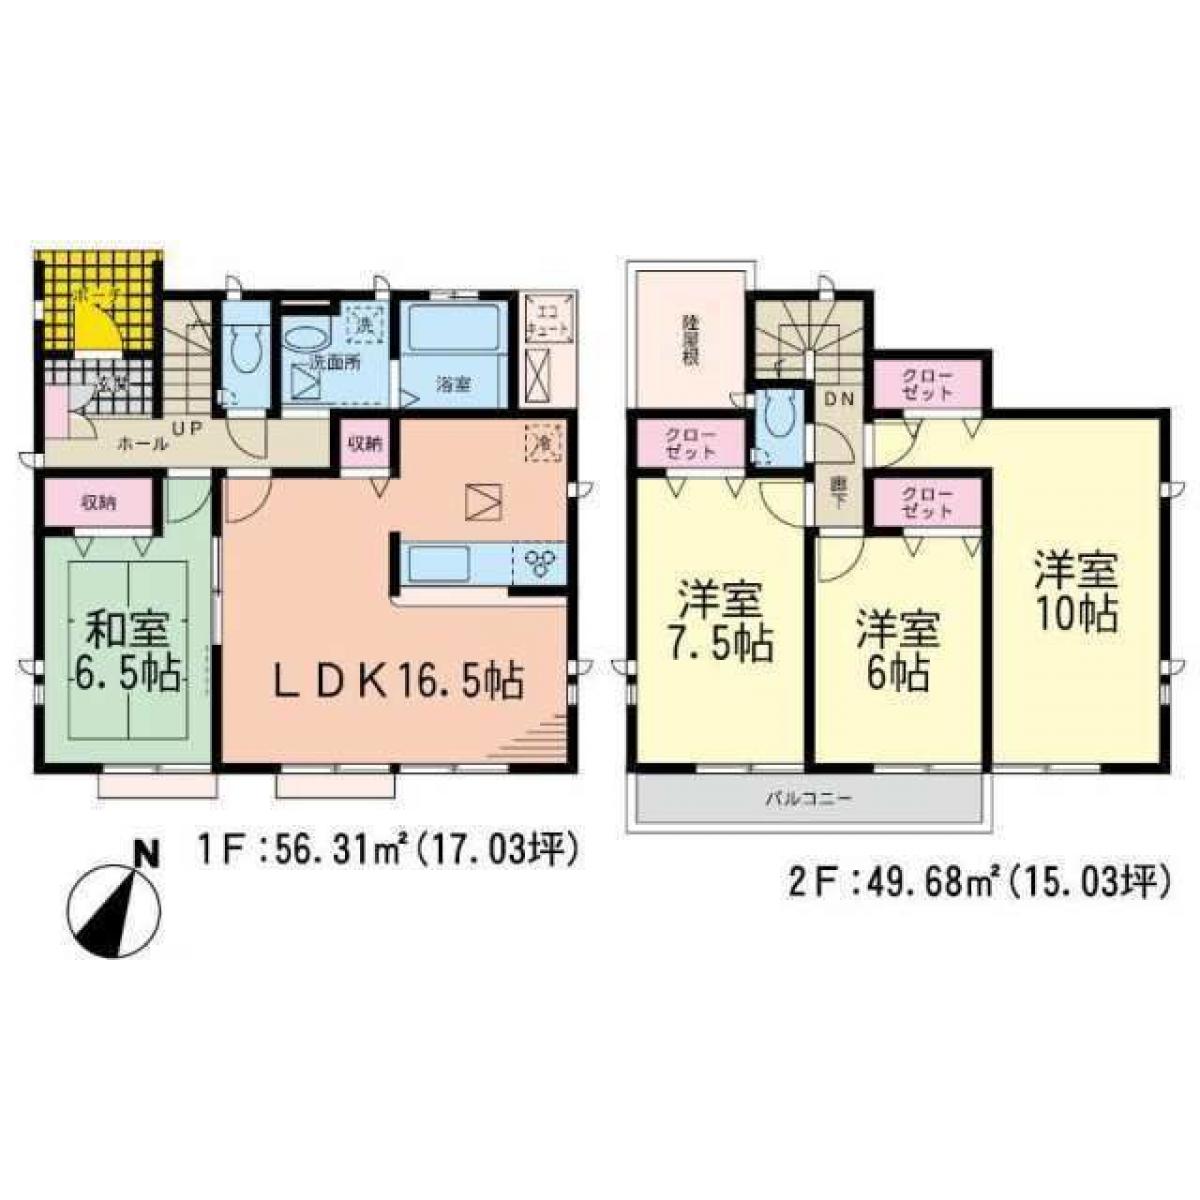 Picture of Home For Sale in Sendai Shi Taihaku Ku, Miyagi, Japan